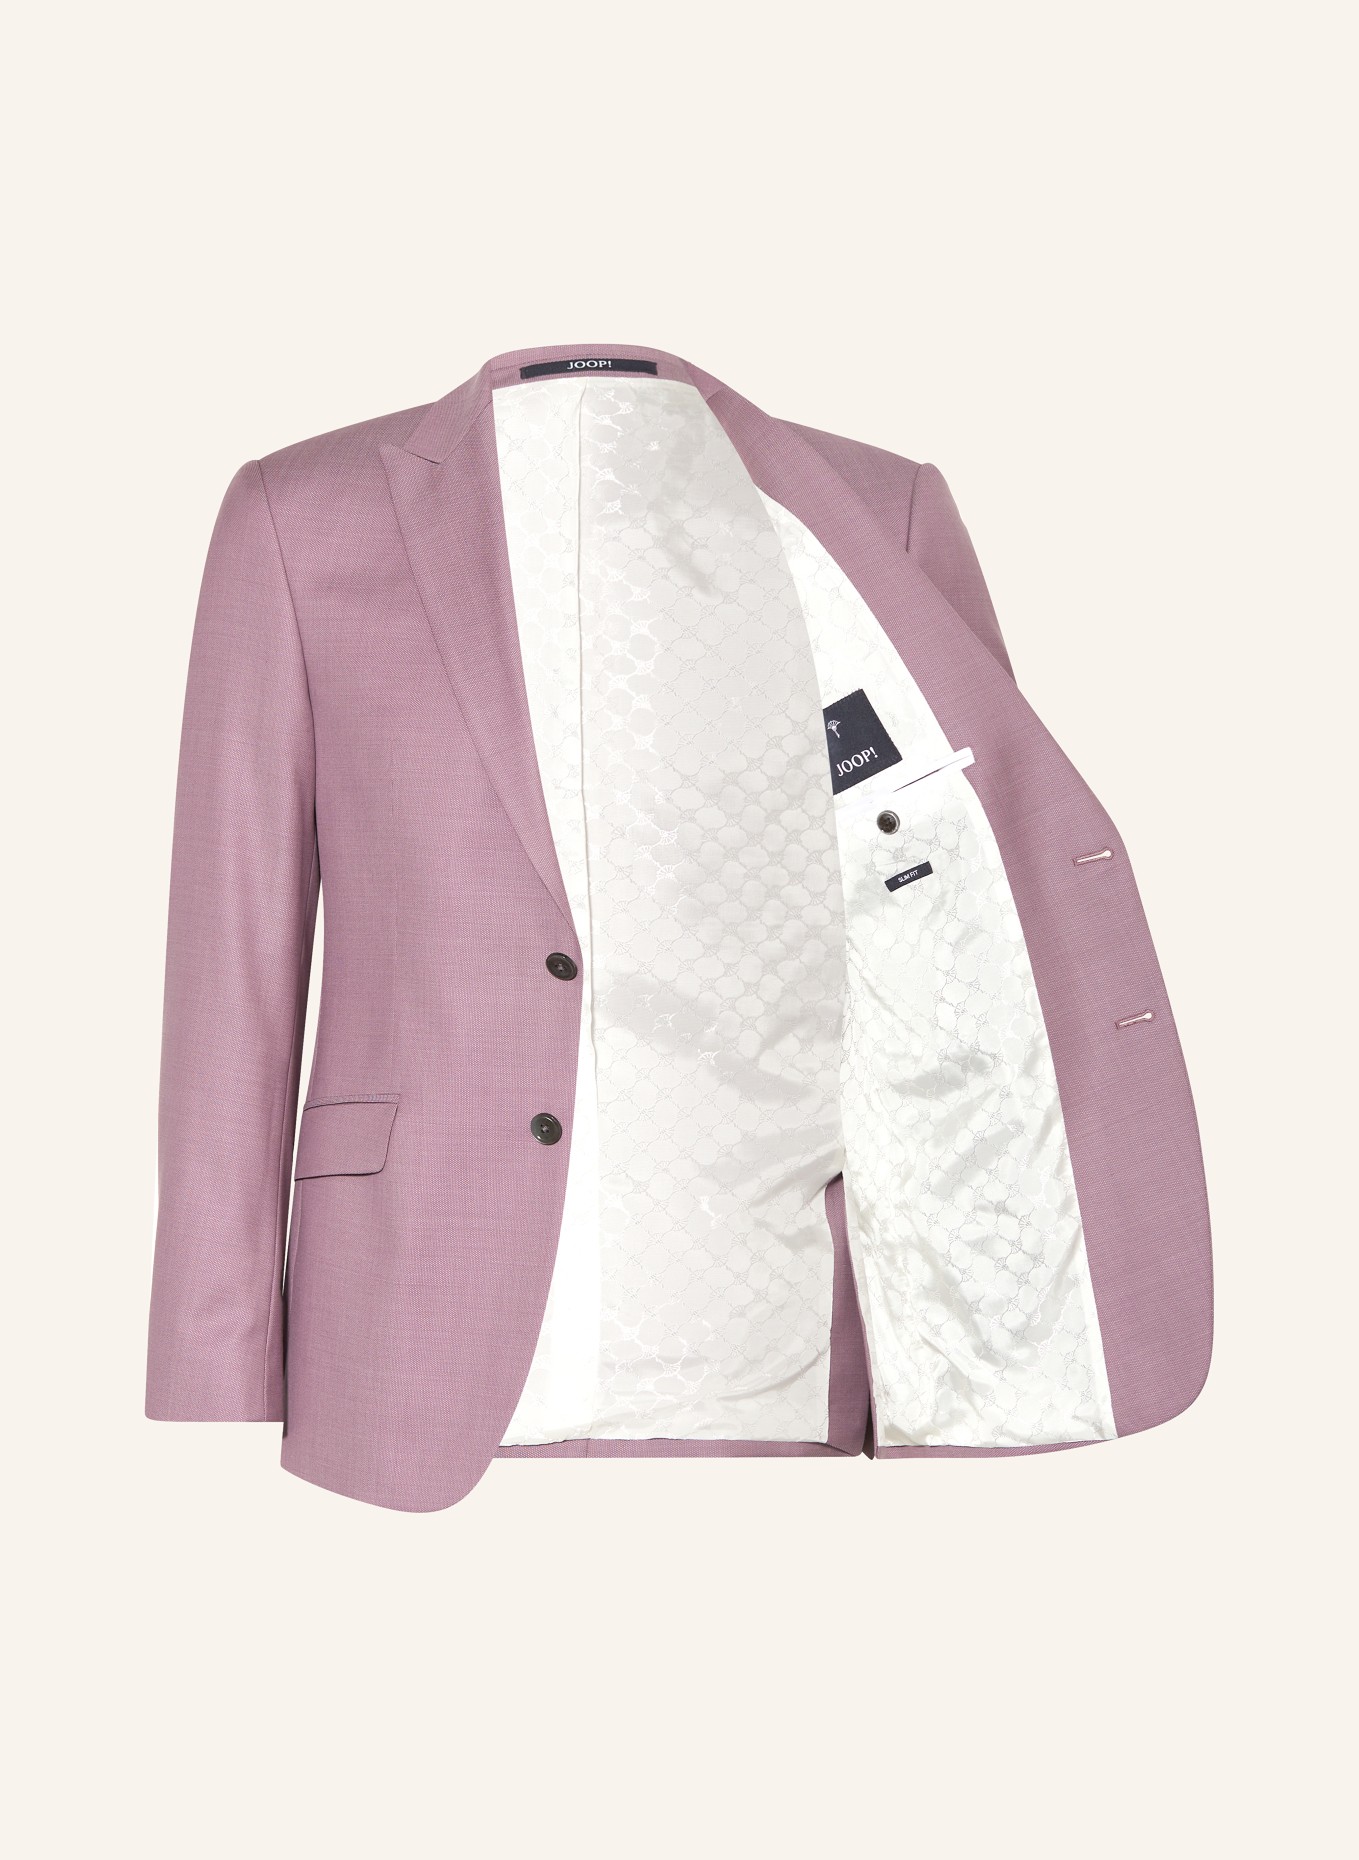 JOOP! Suit jacket HAWKER slim fit, Color: 650 Dark Pink                  650 (Image 4)